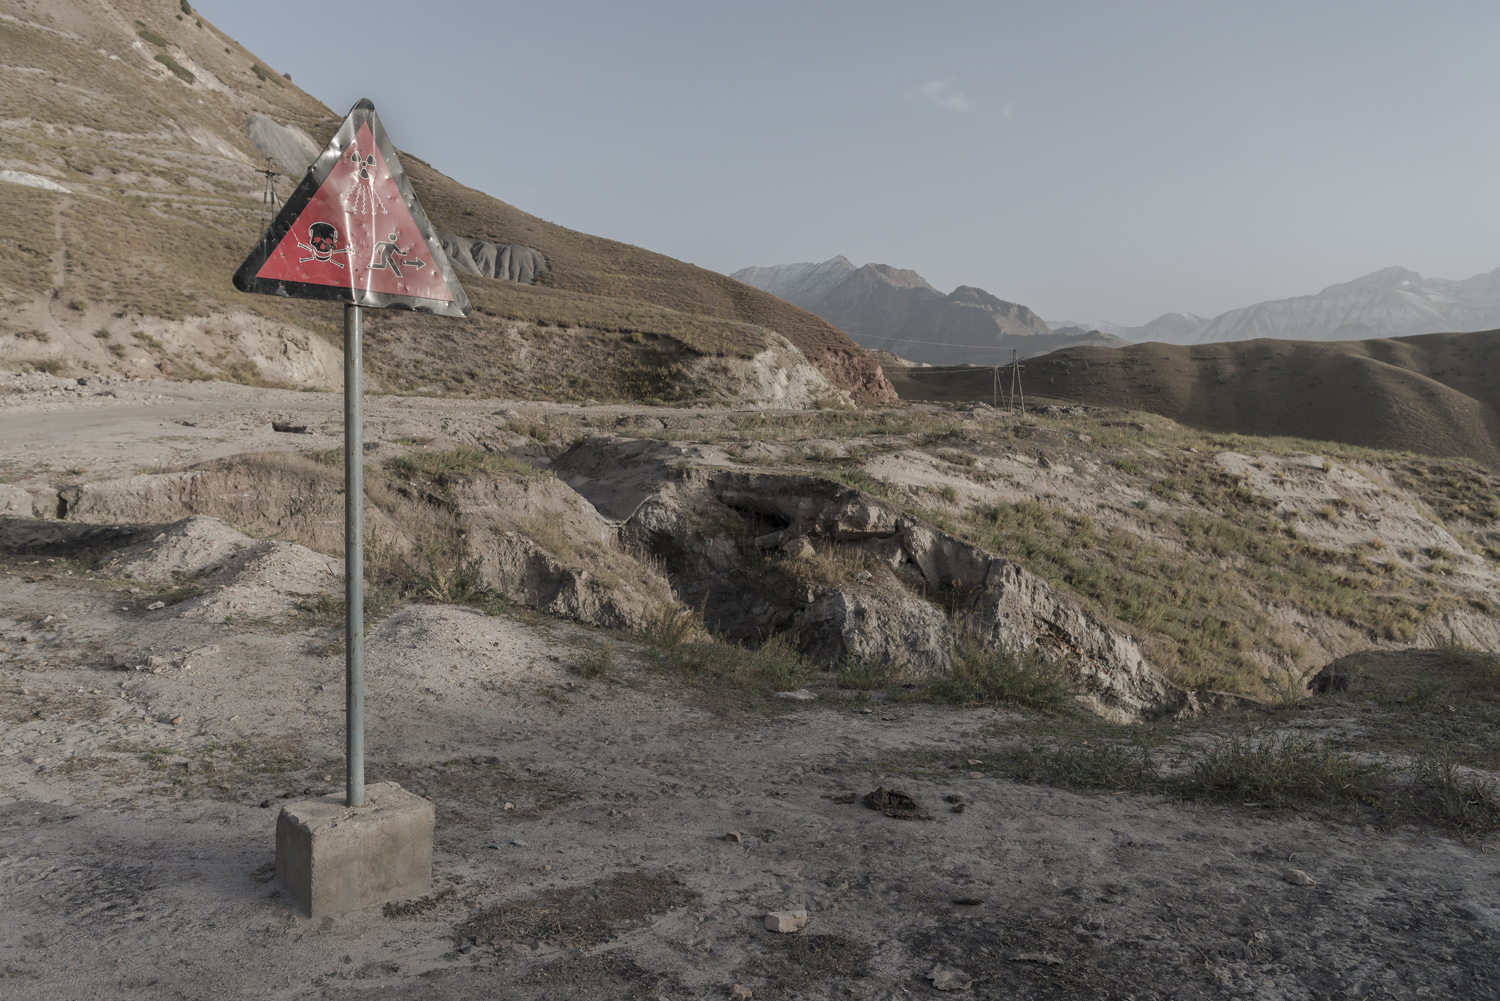 min-kush-soviet-uranium-mining-town-industrial-Russia-Kyrgyzstan-ruins-soviet-sign-jo-kearney-photos-video-photography-danger-sign-uranium-mine.jpg